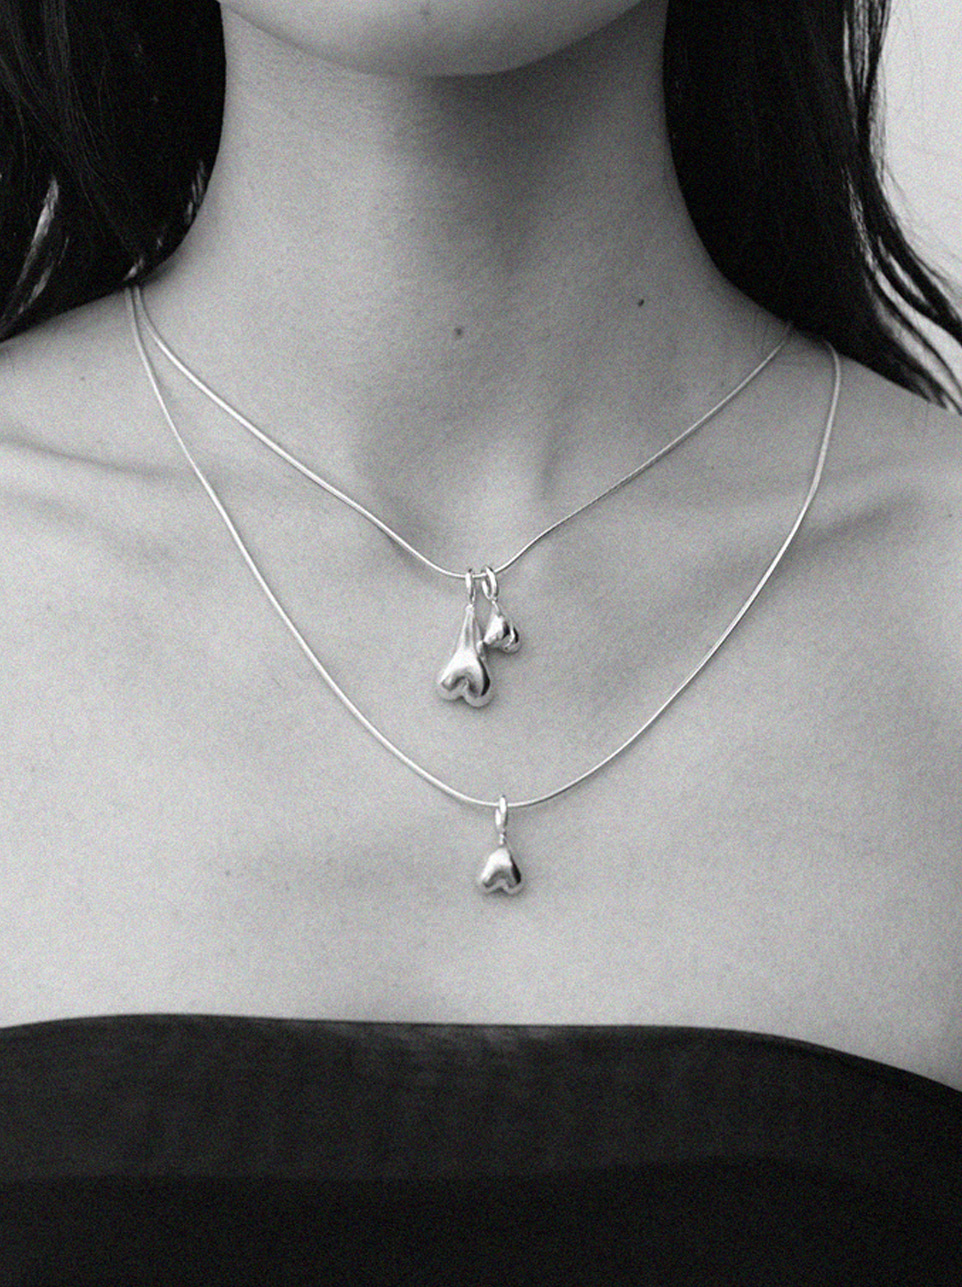 Love pendant necklace